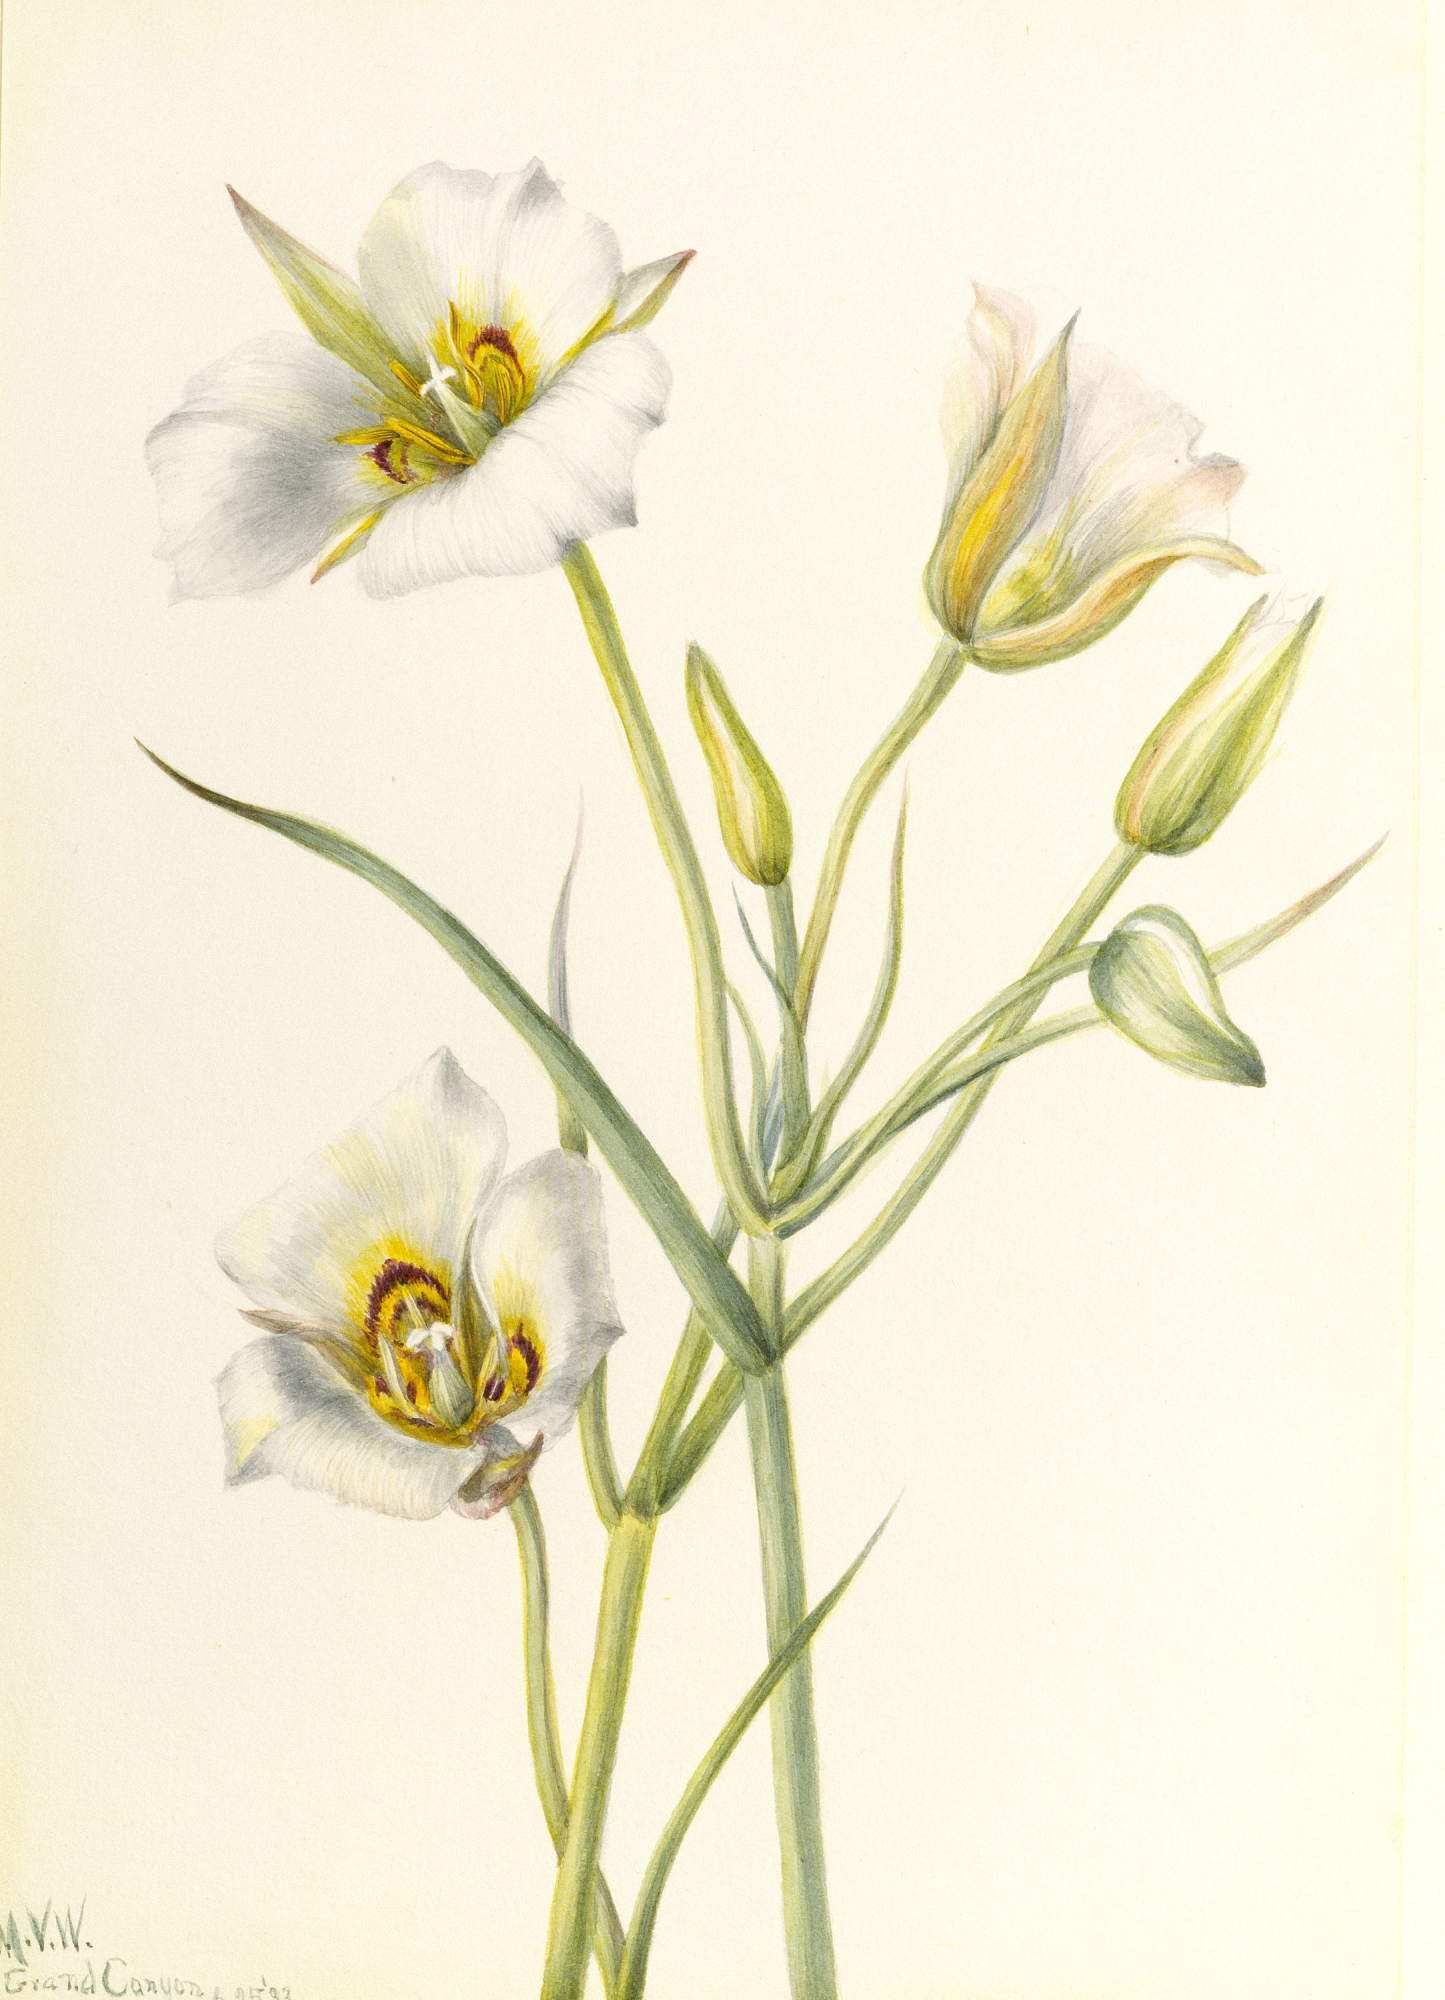 Sego Lily (Calochortus nuttallii) | Smithsonian American Art Museum